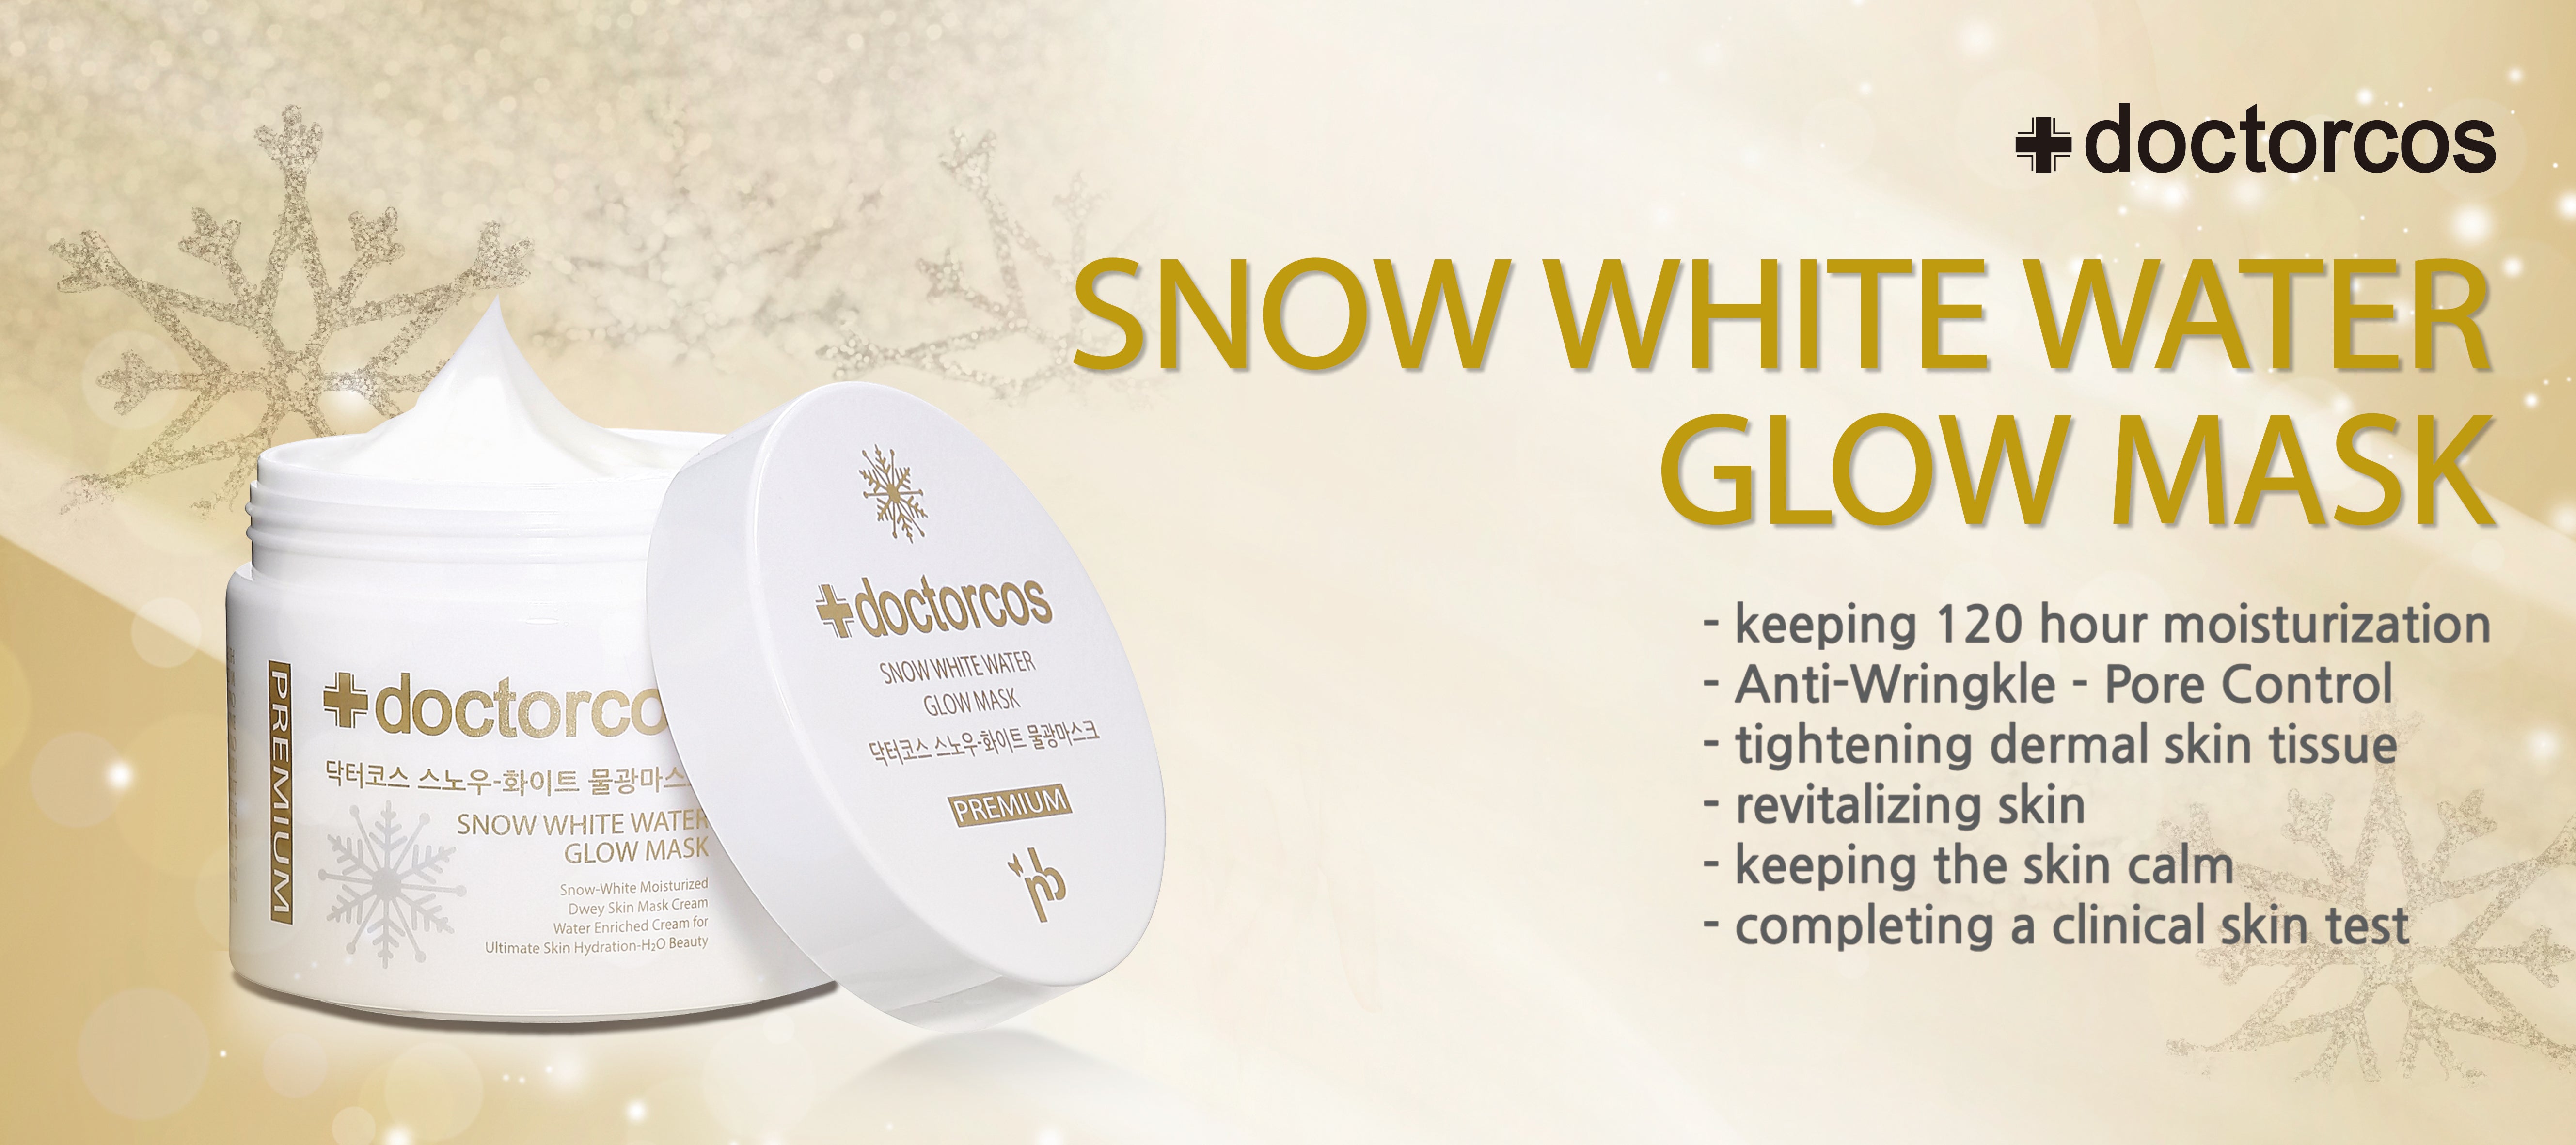 [Doctorcos] Premium Snow White Water Glow Mask